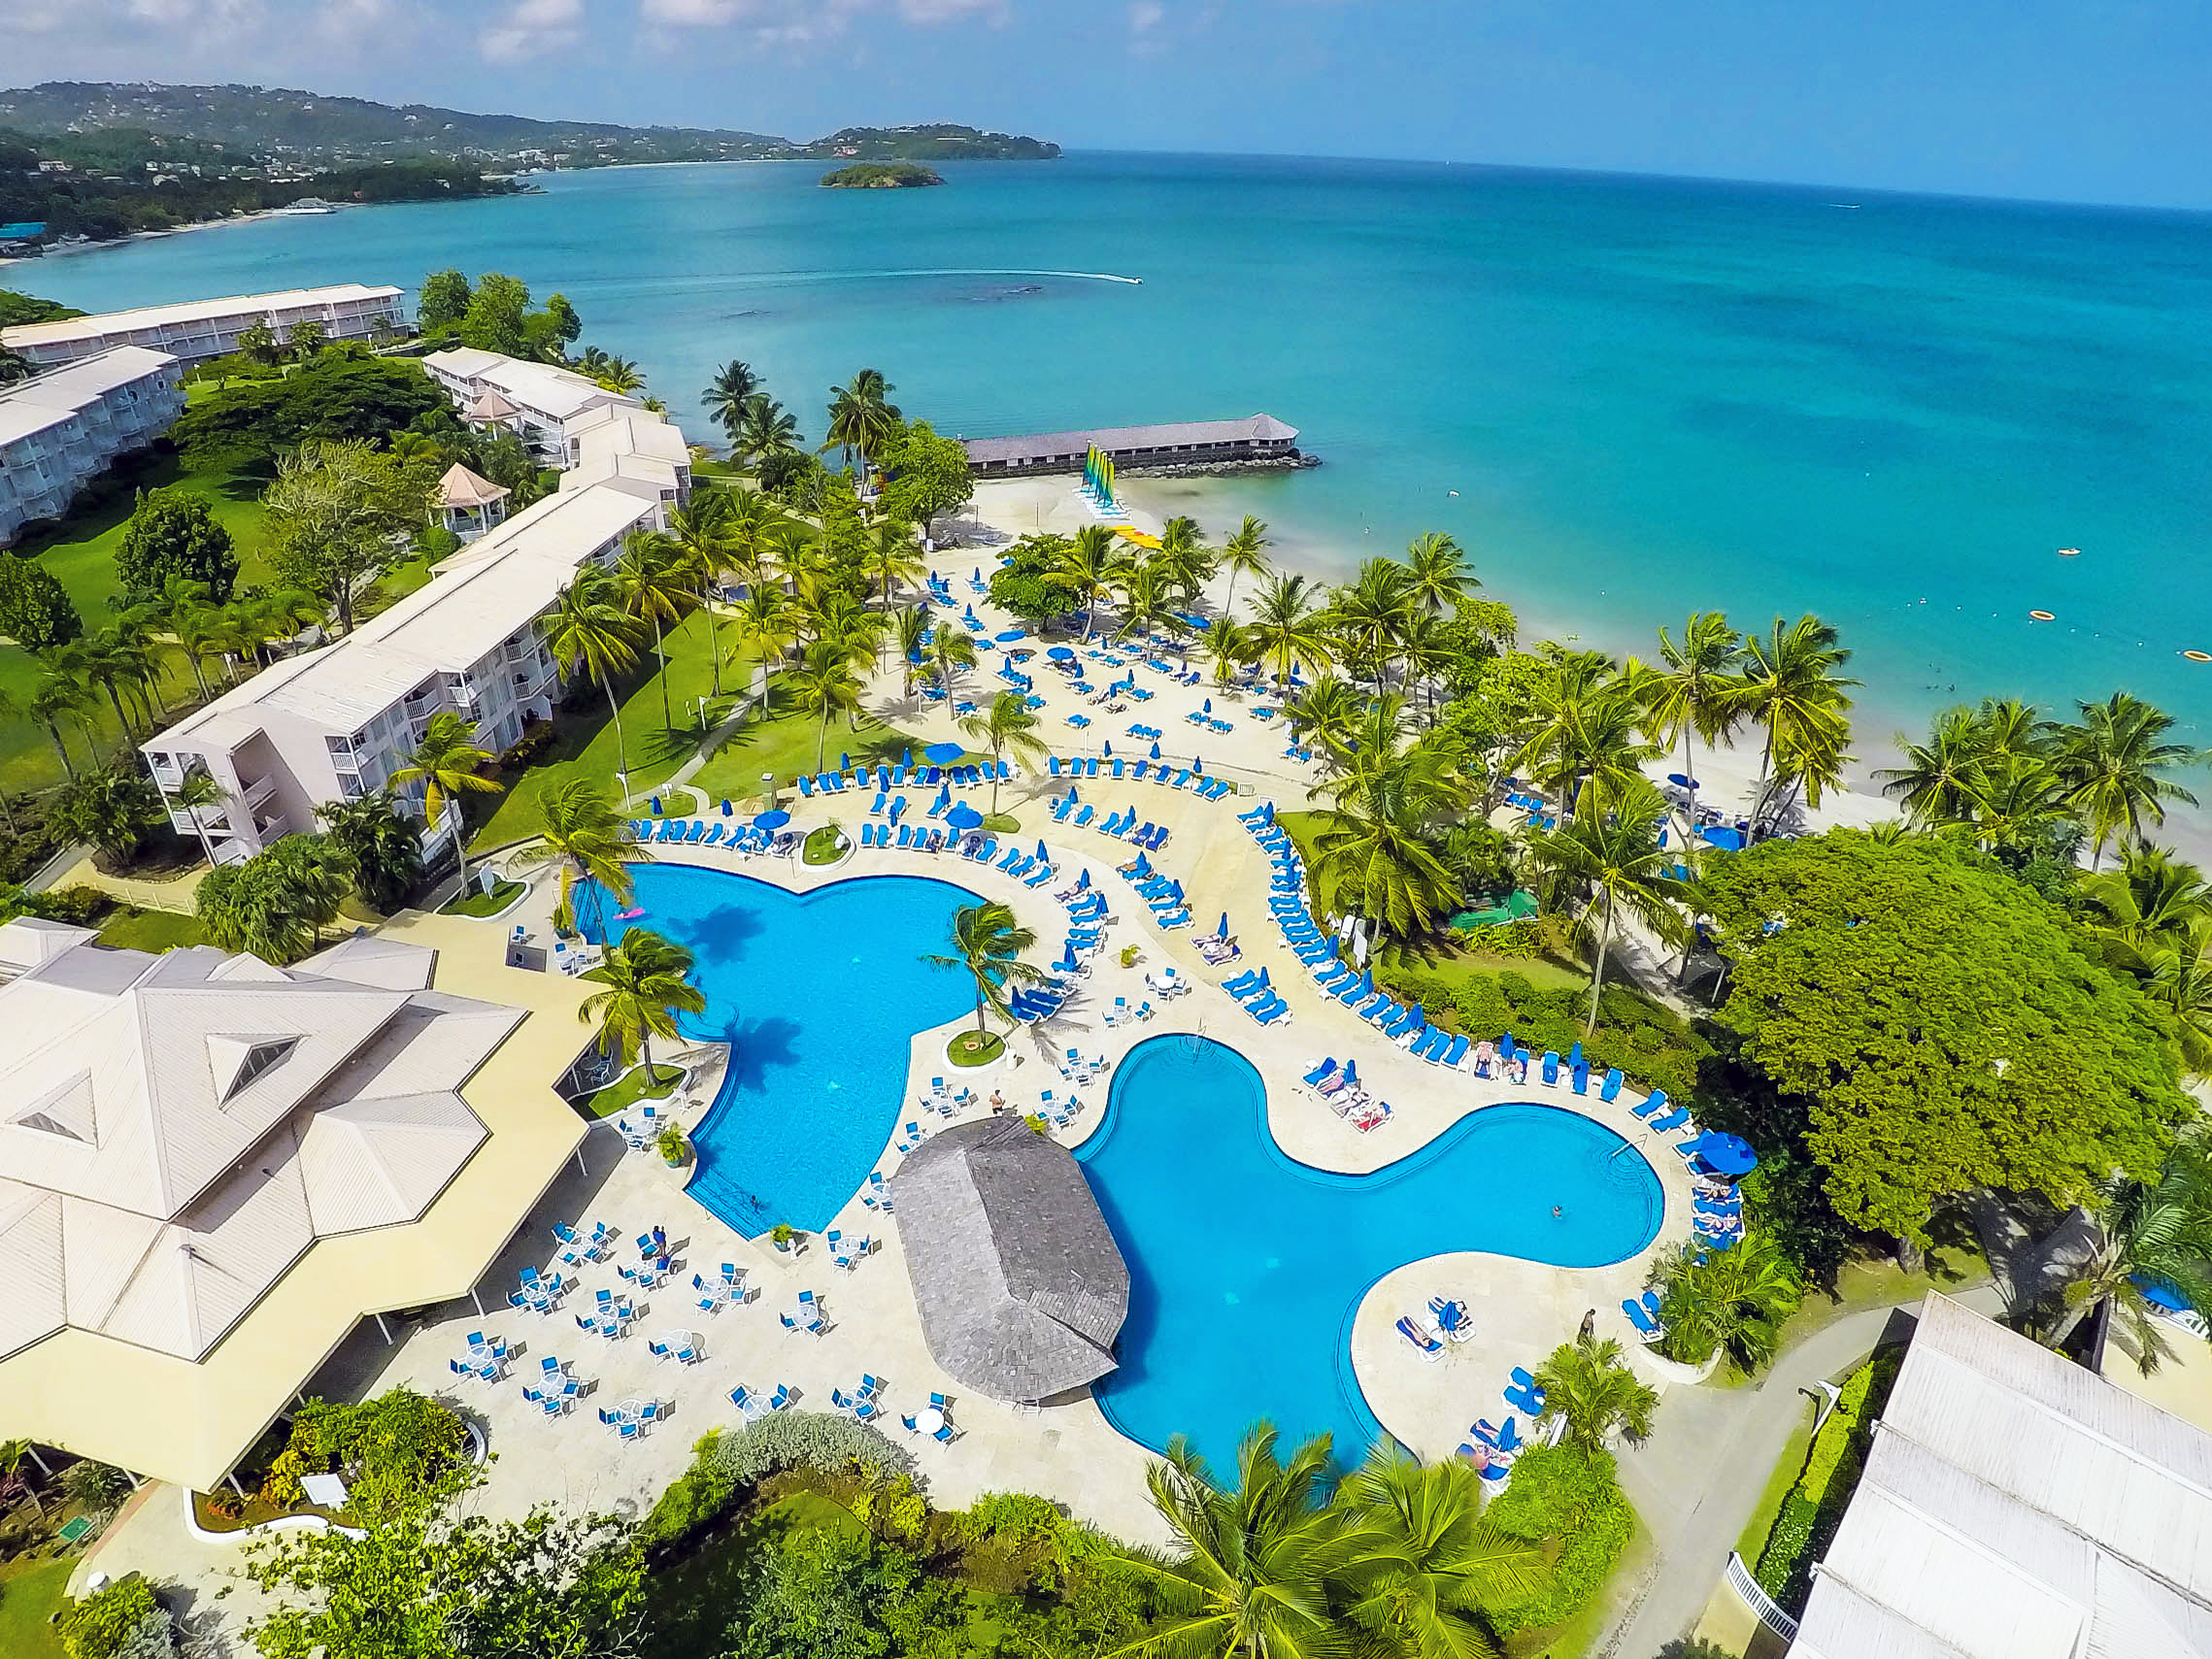 St. James's Club Morgan Bay, Saint Lucia Announces Fabulous Fall & Winter Rates ...